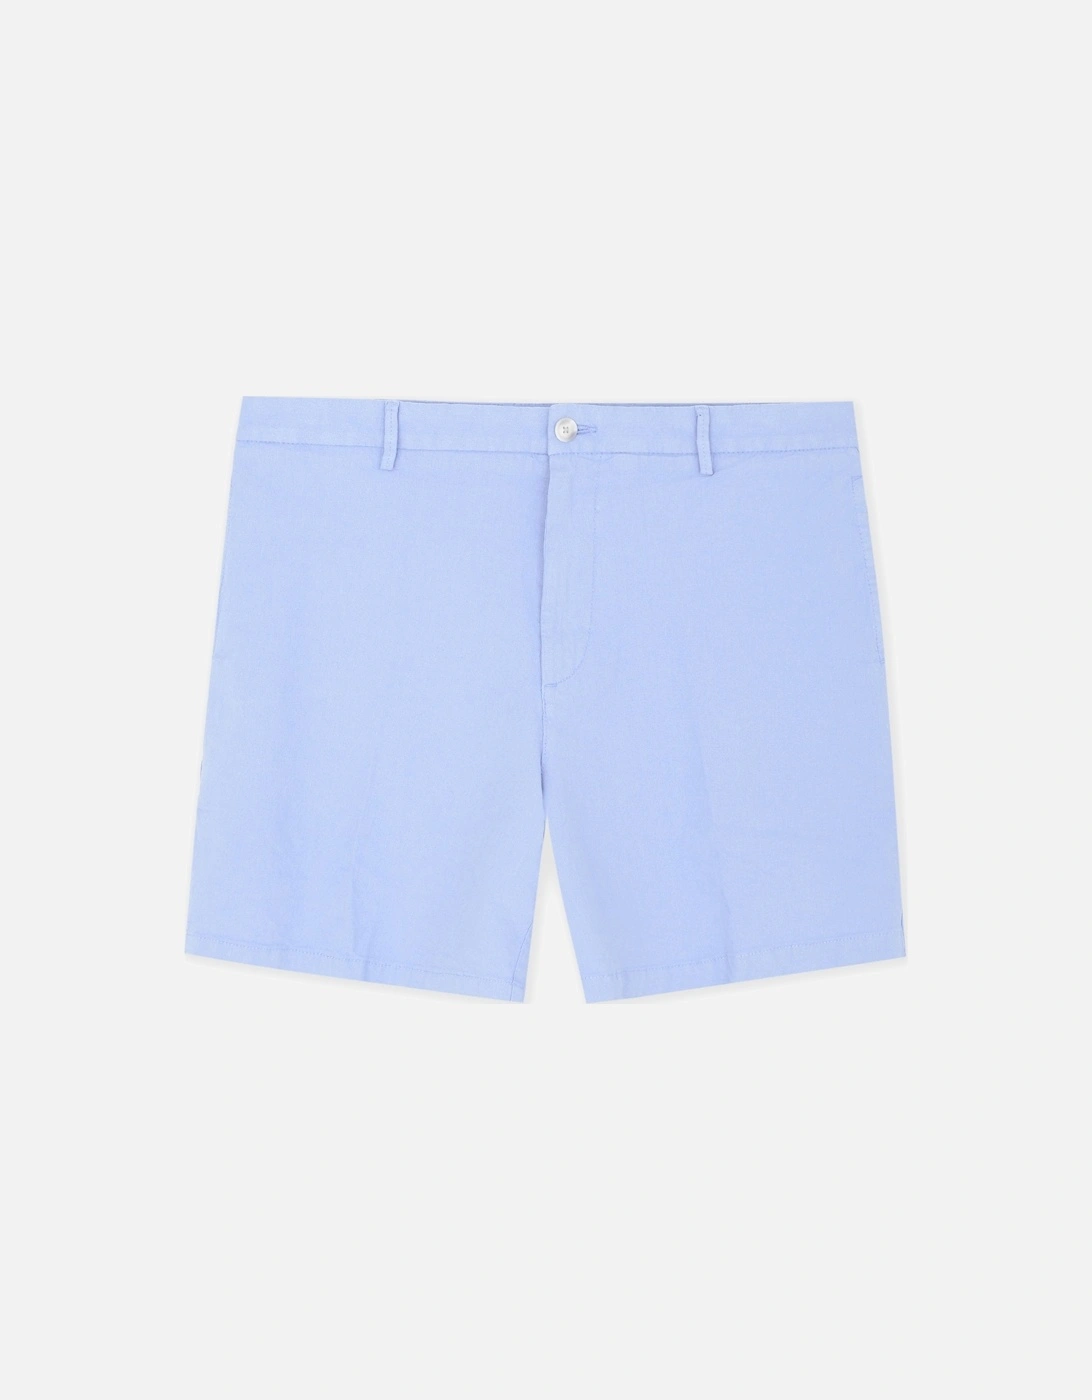 Men's Karlos Shorts Blue product